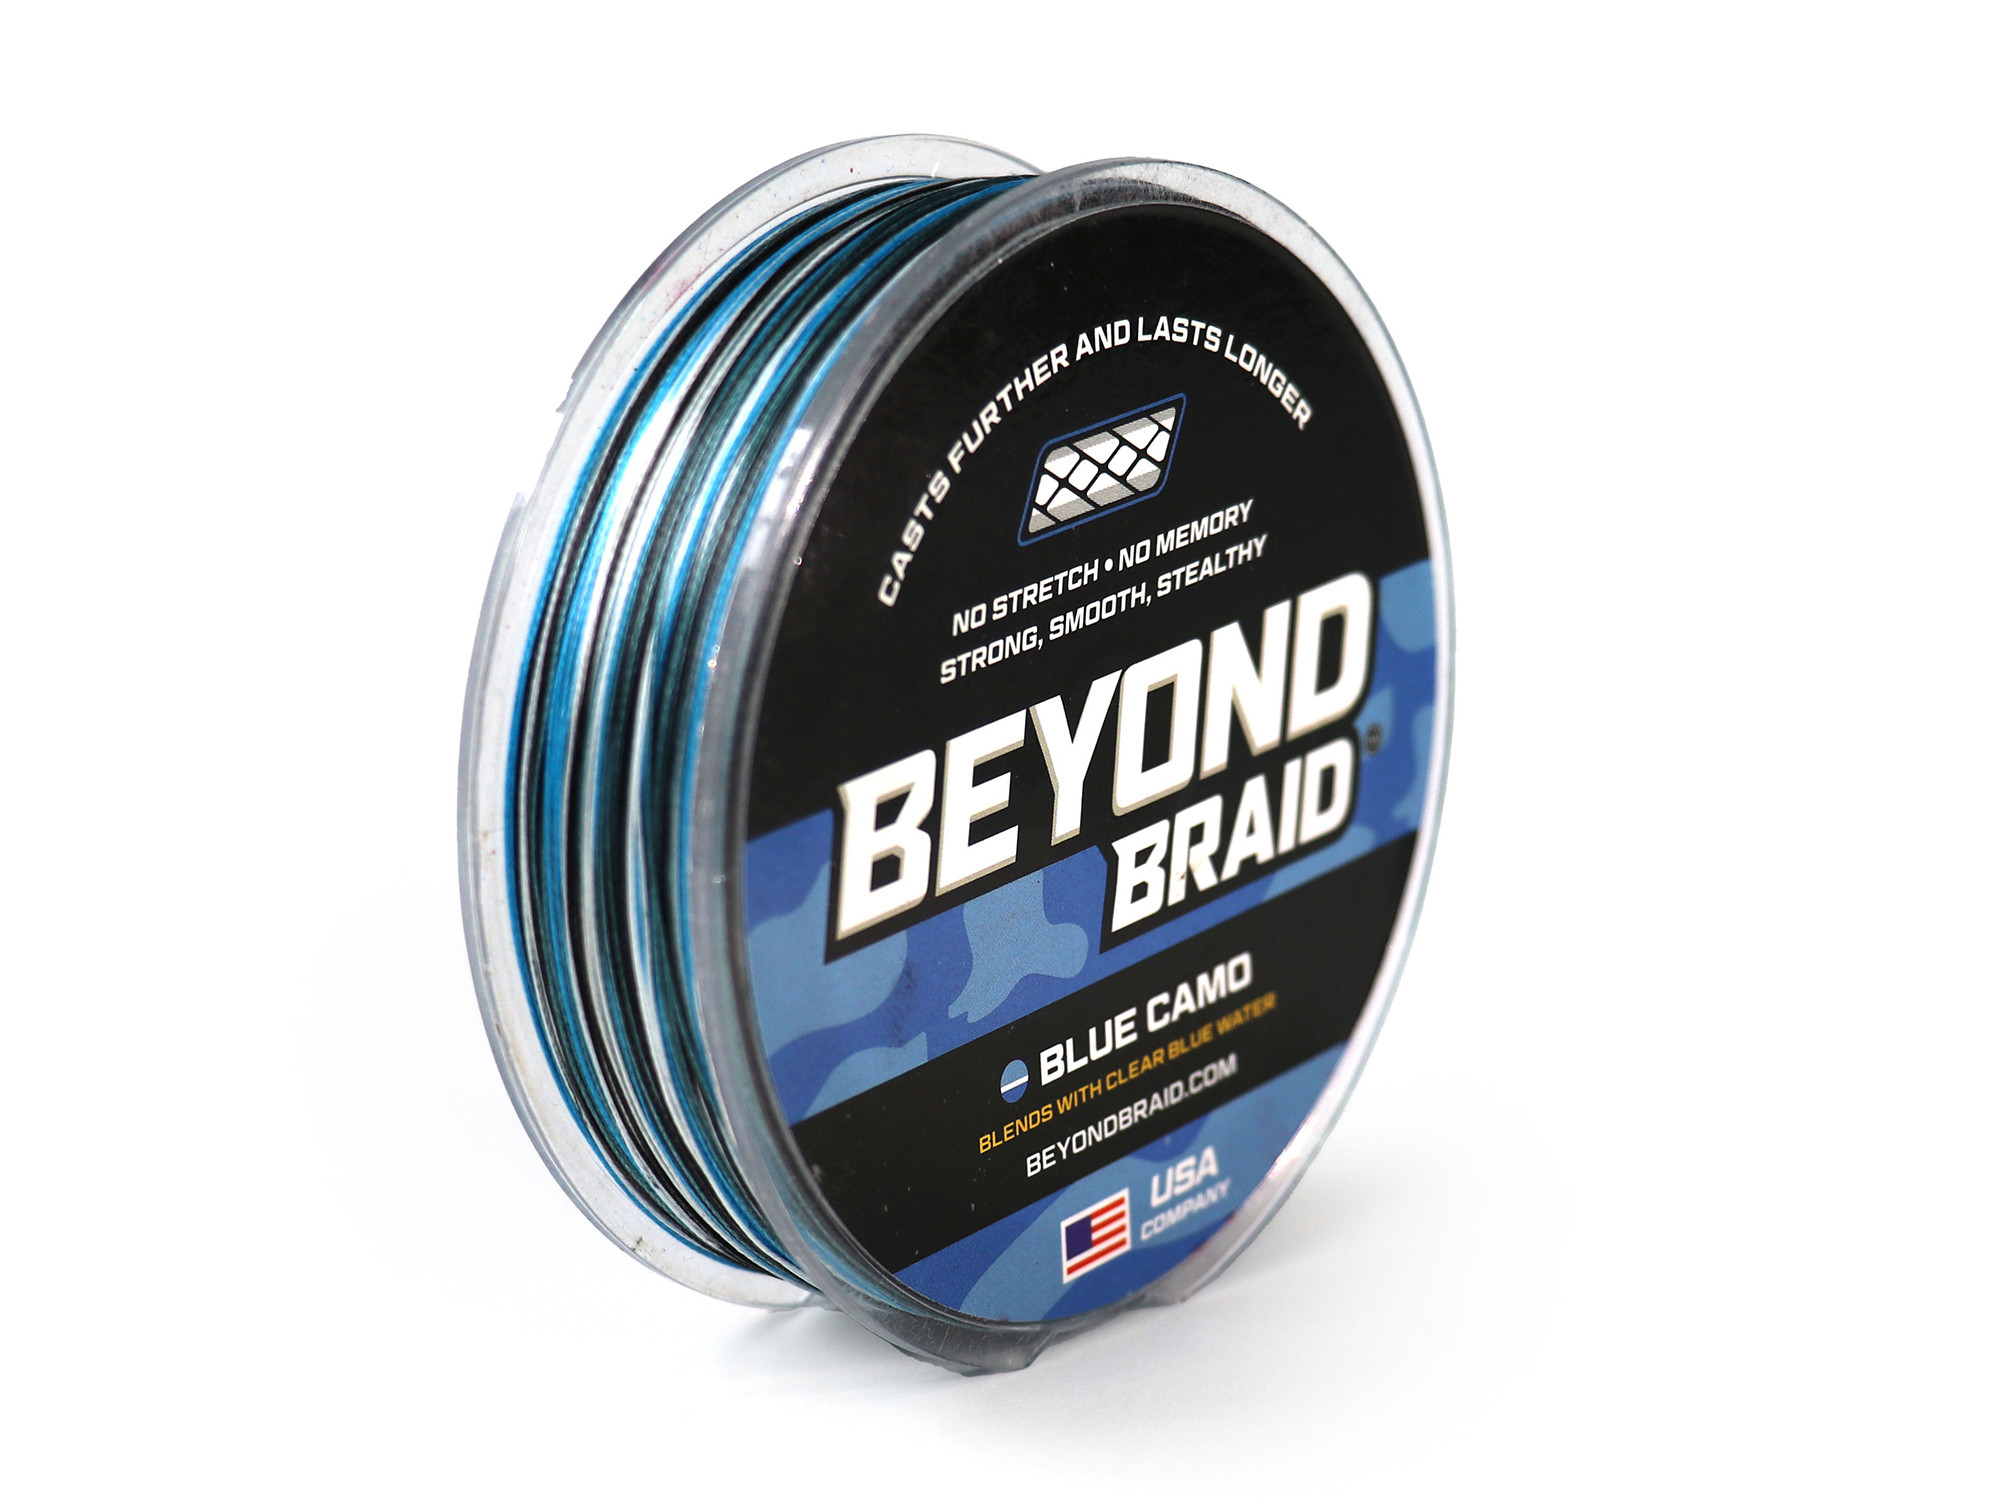 Beyond Braid Braided Line